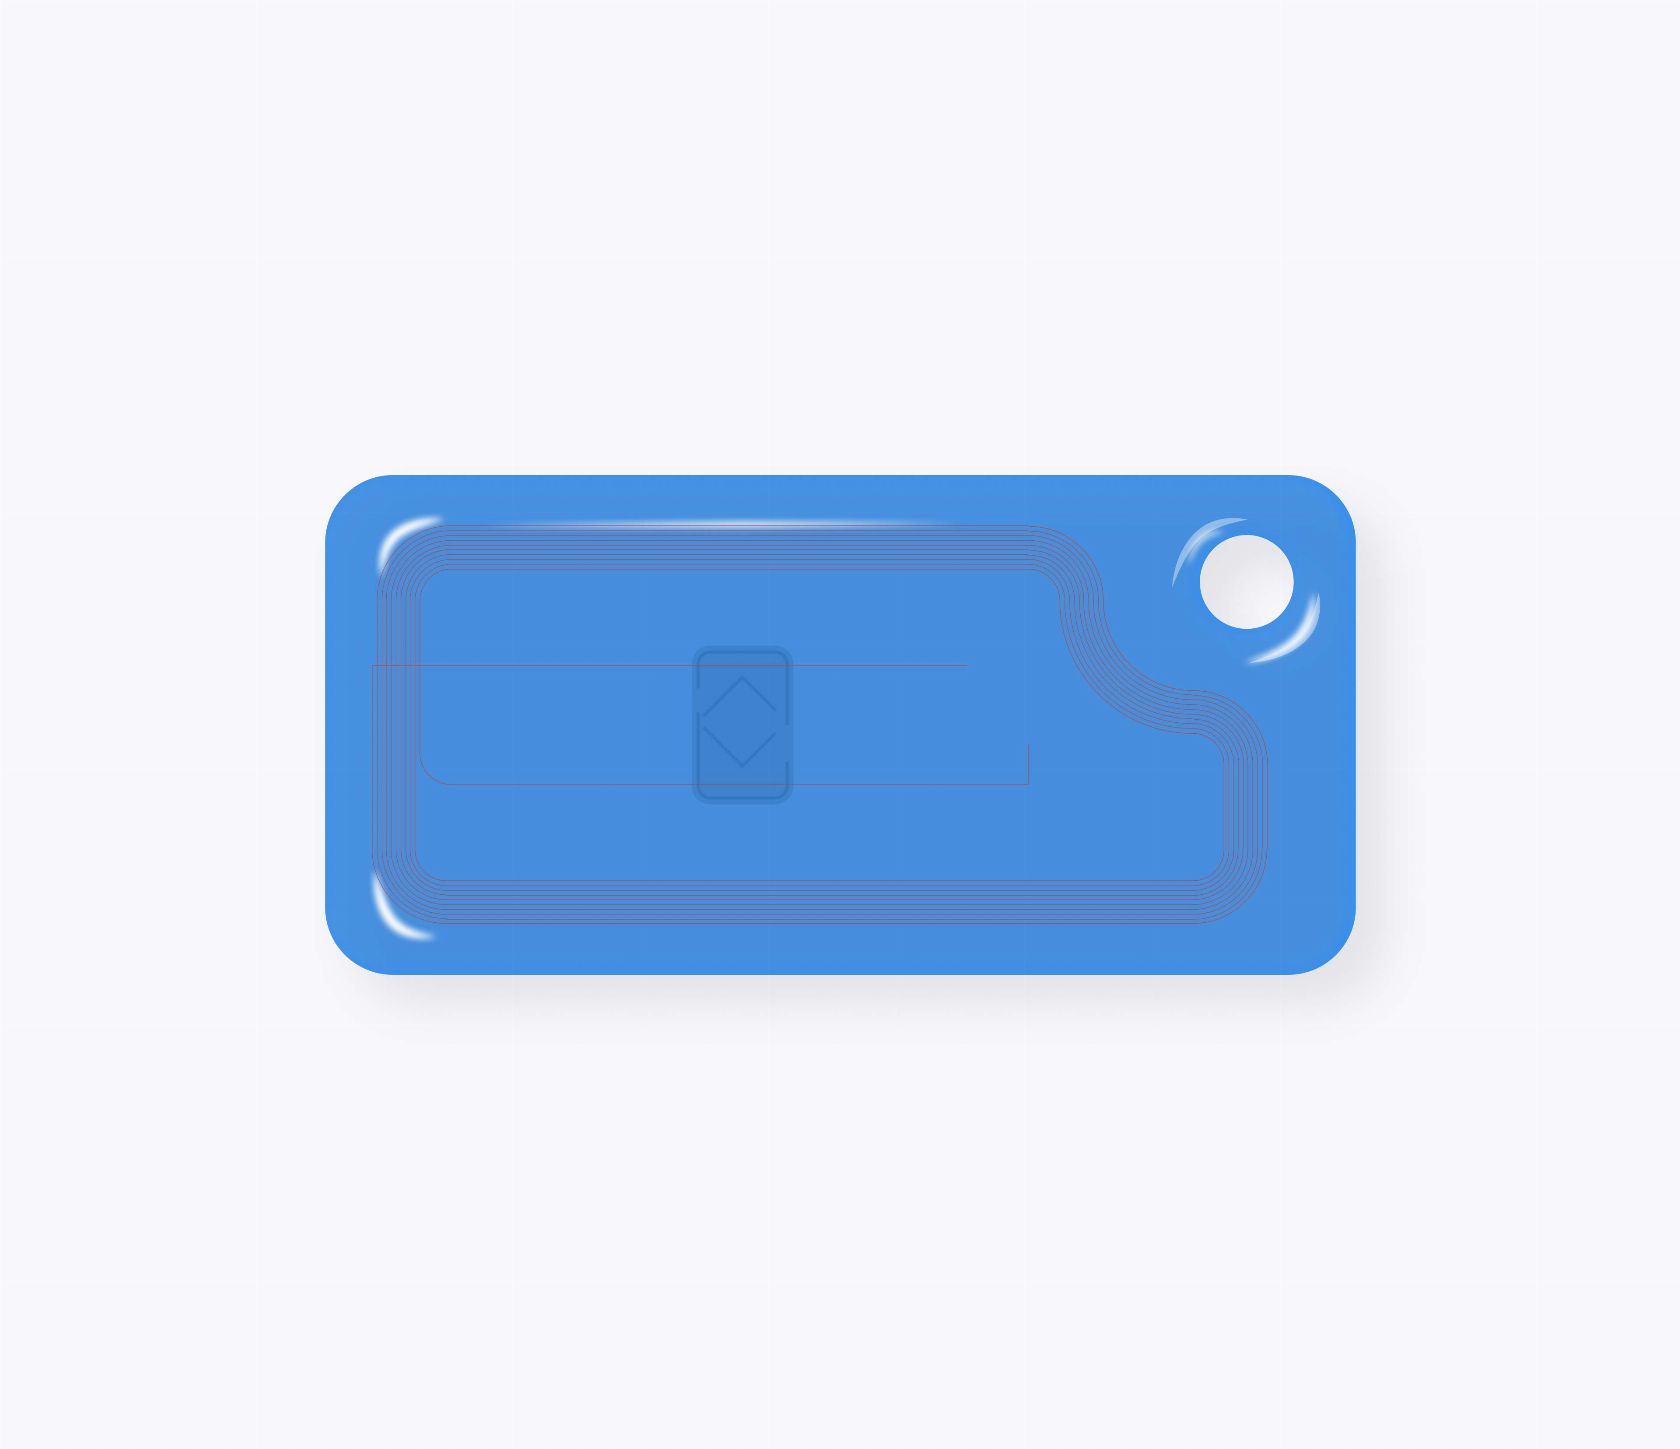 RFID-брелок NEOKEY® Air CARAMEL® (прямоугольной формы) MIFARE 1k 4b nUID прозрачный синий